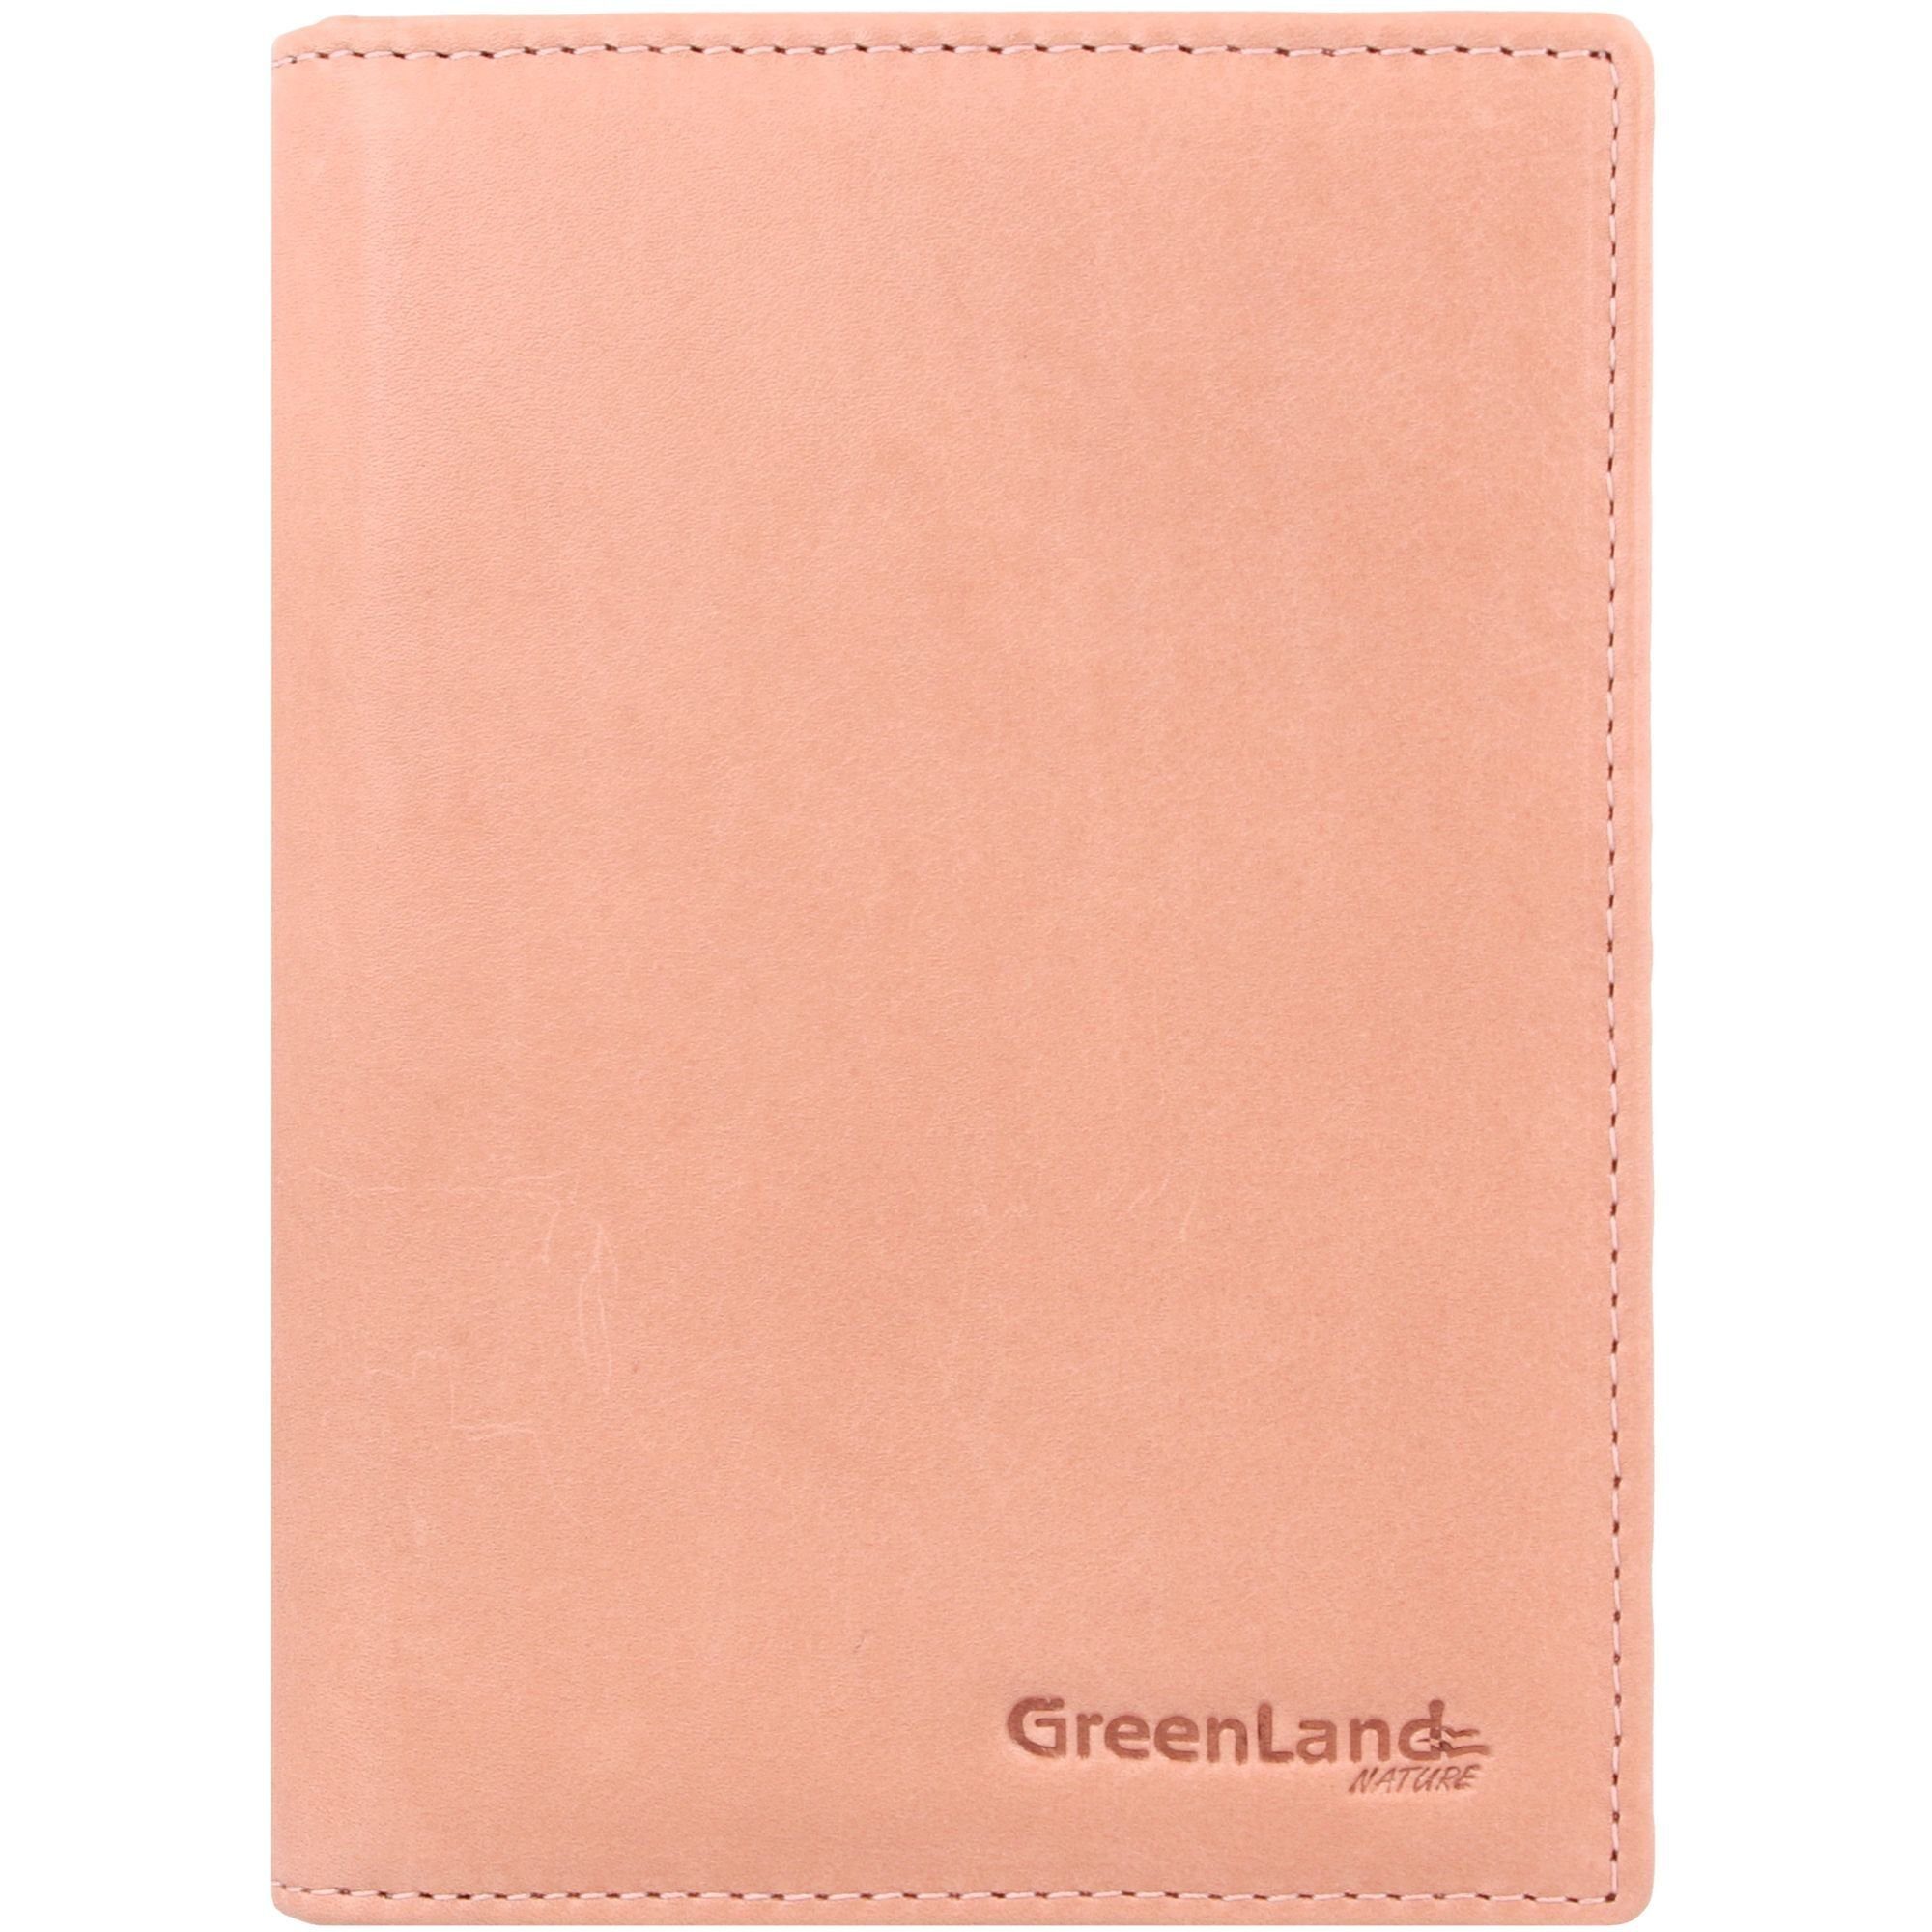 GreenLand Nature Etui Soft Colour, Leder flamingo